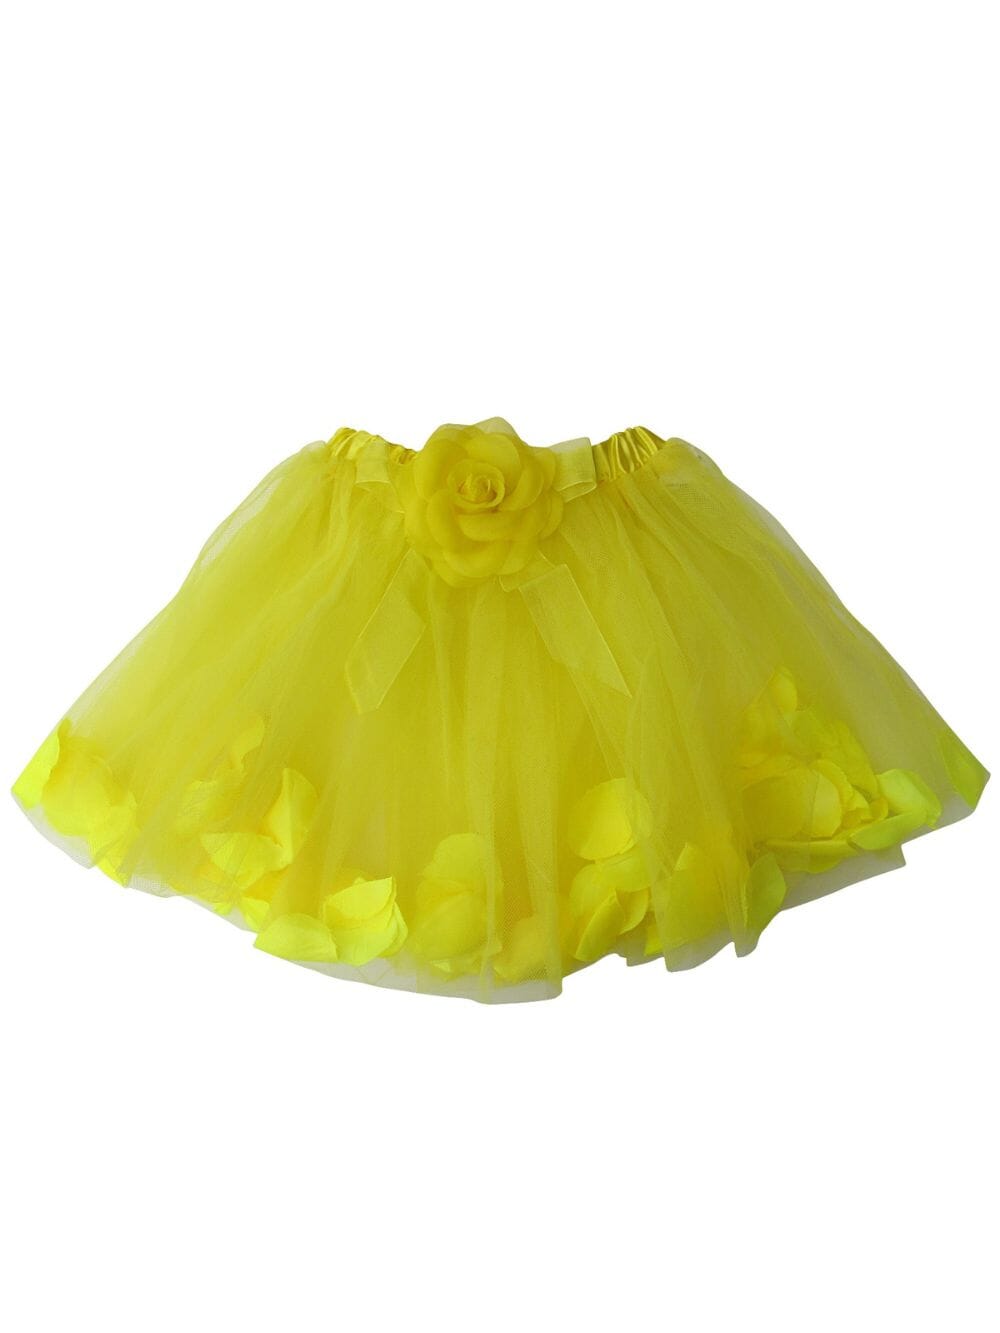 Yellow Petal Tutu Skirt - Kids Size Tulle Basic Ballet Dance Costume Girls Tutus - Sydney So Sweet